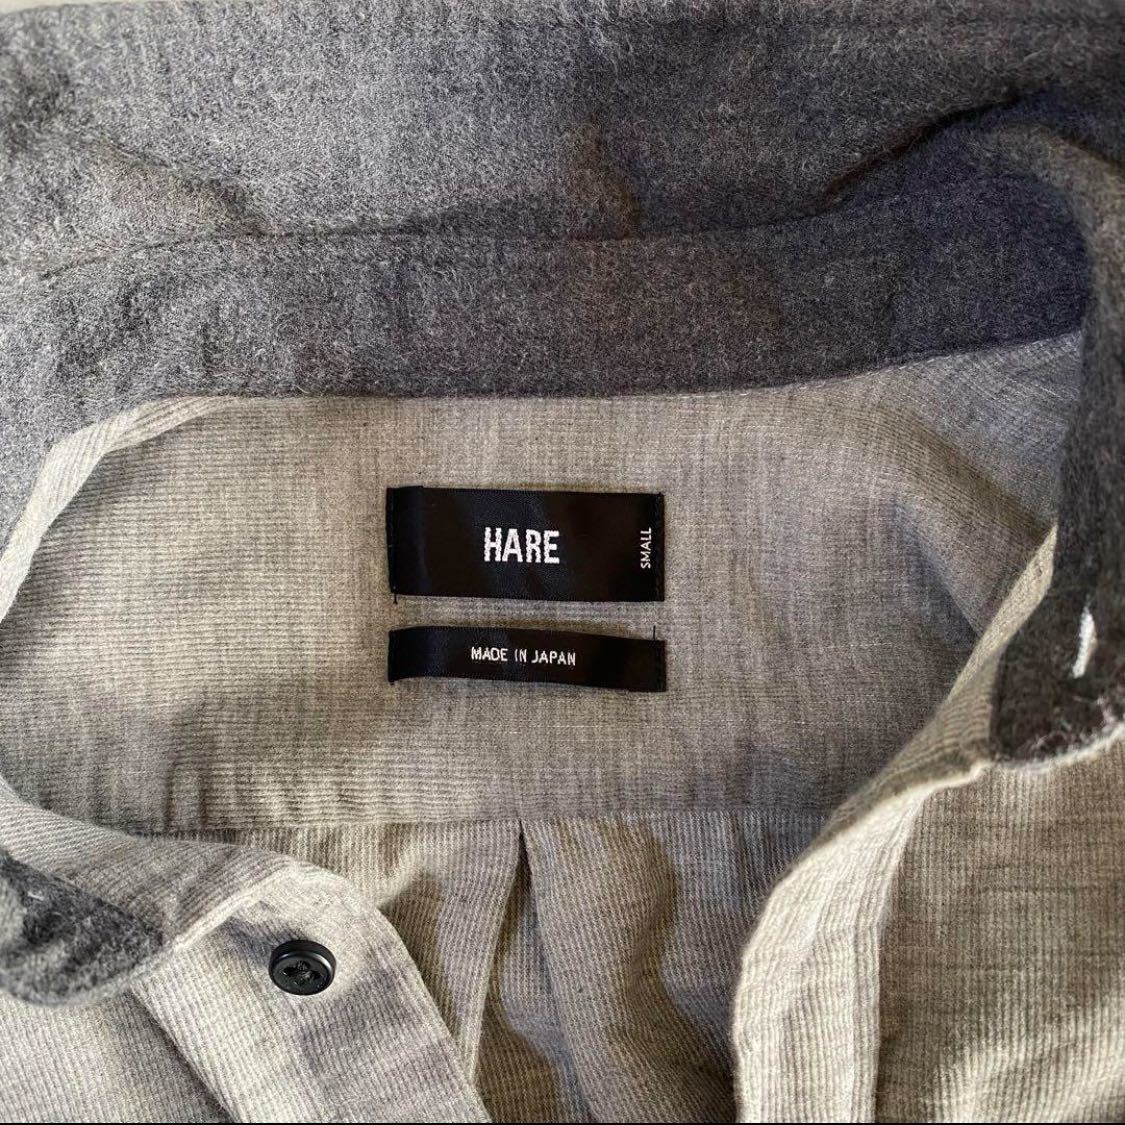  Hare HARE shirt long sleeve shirt cotton S gray 